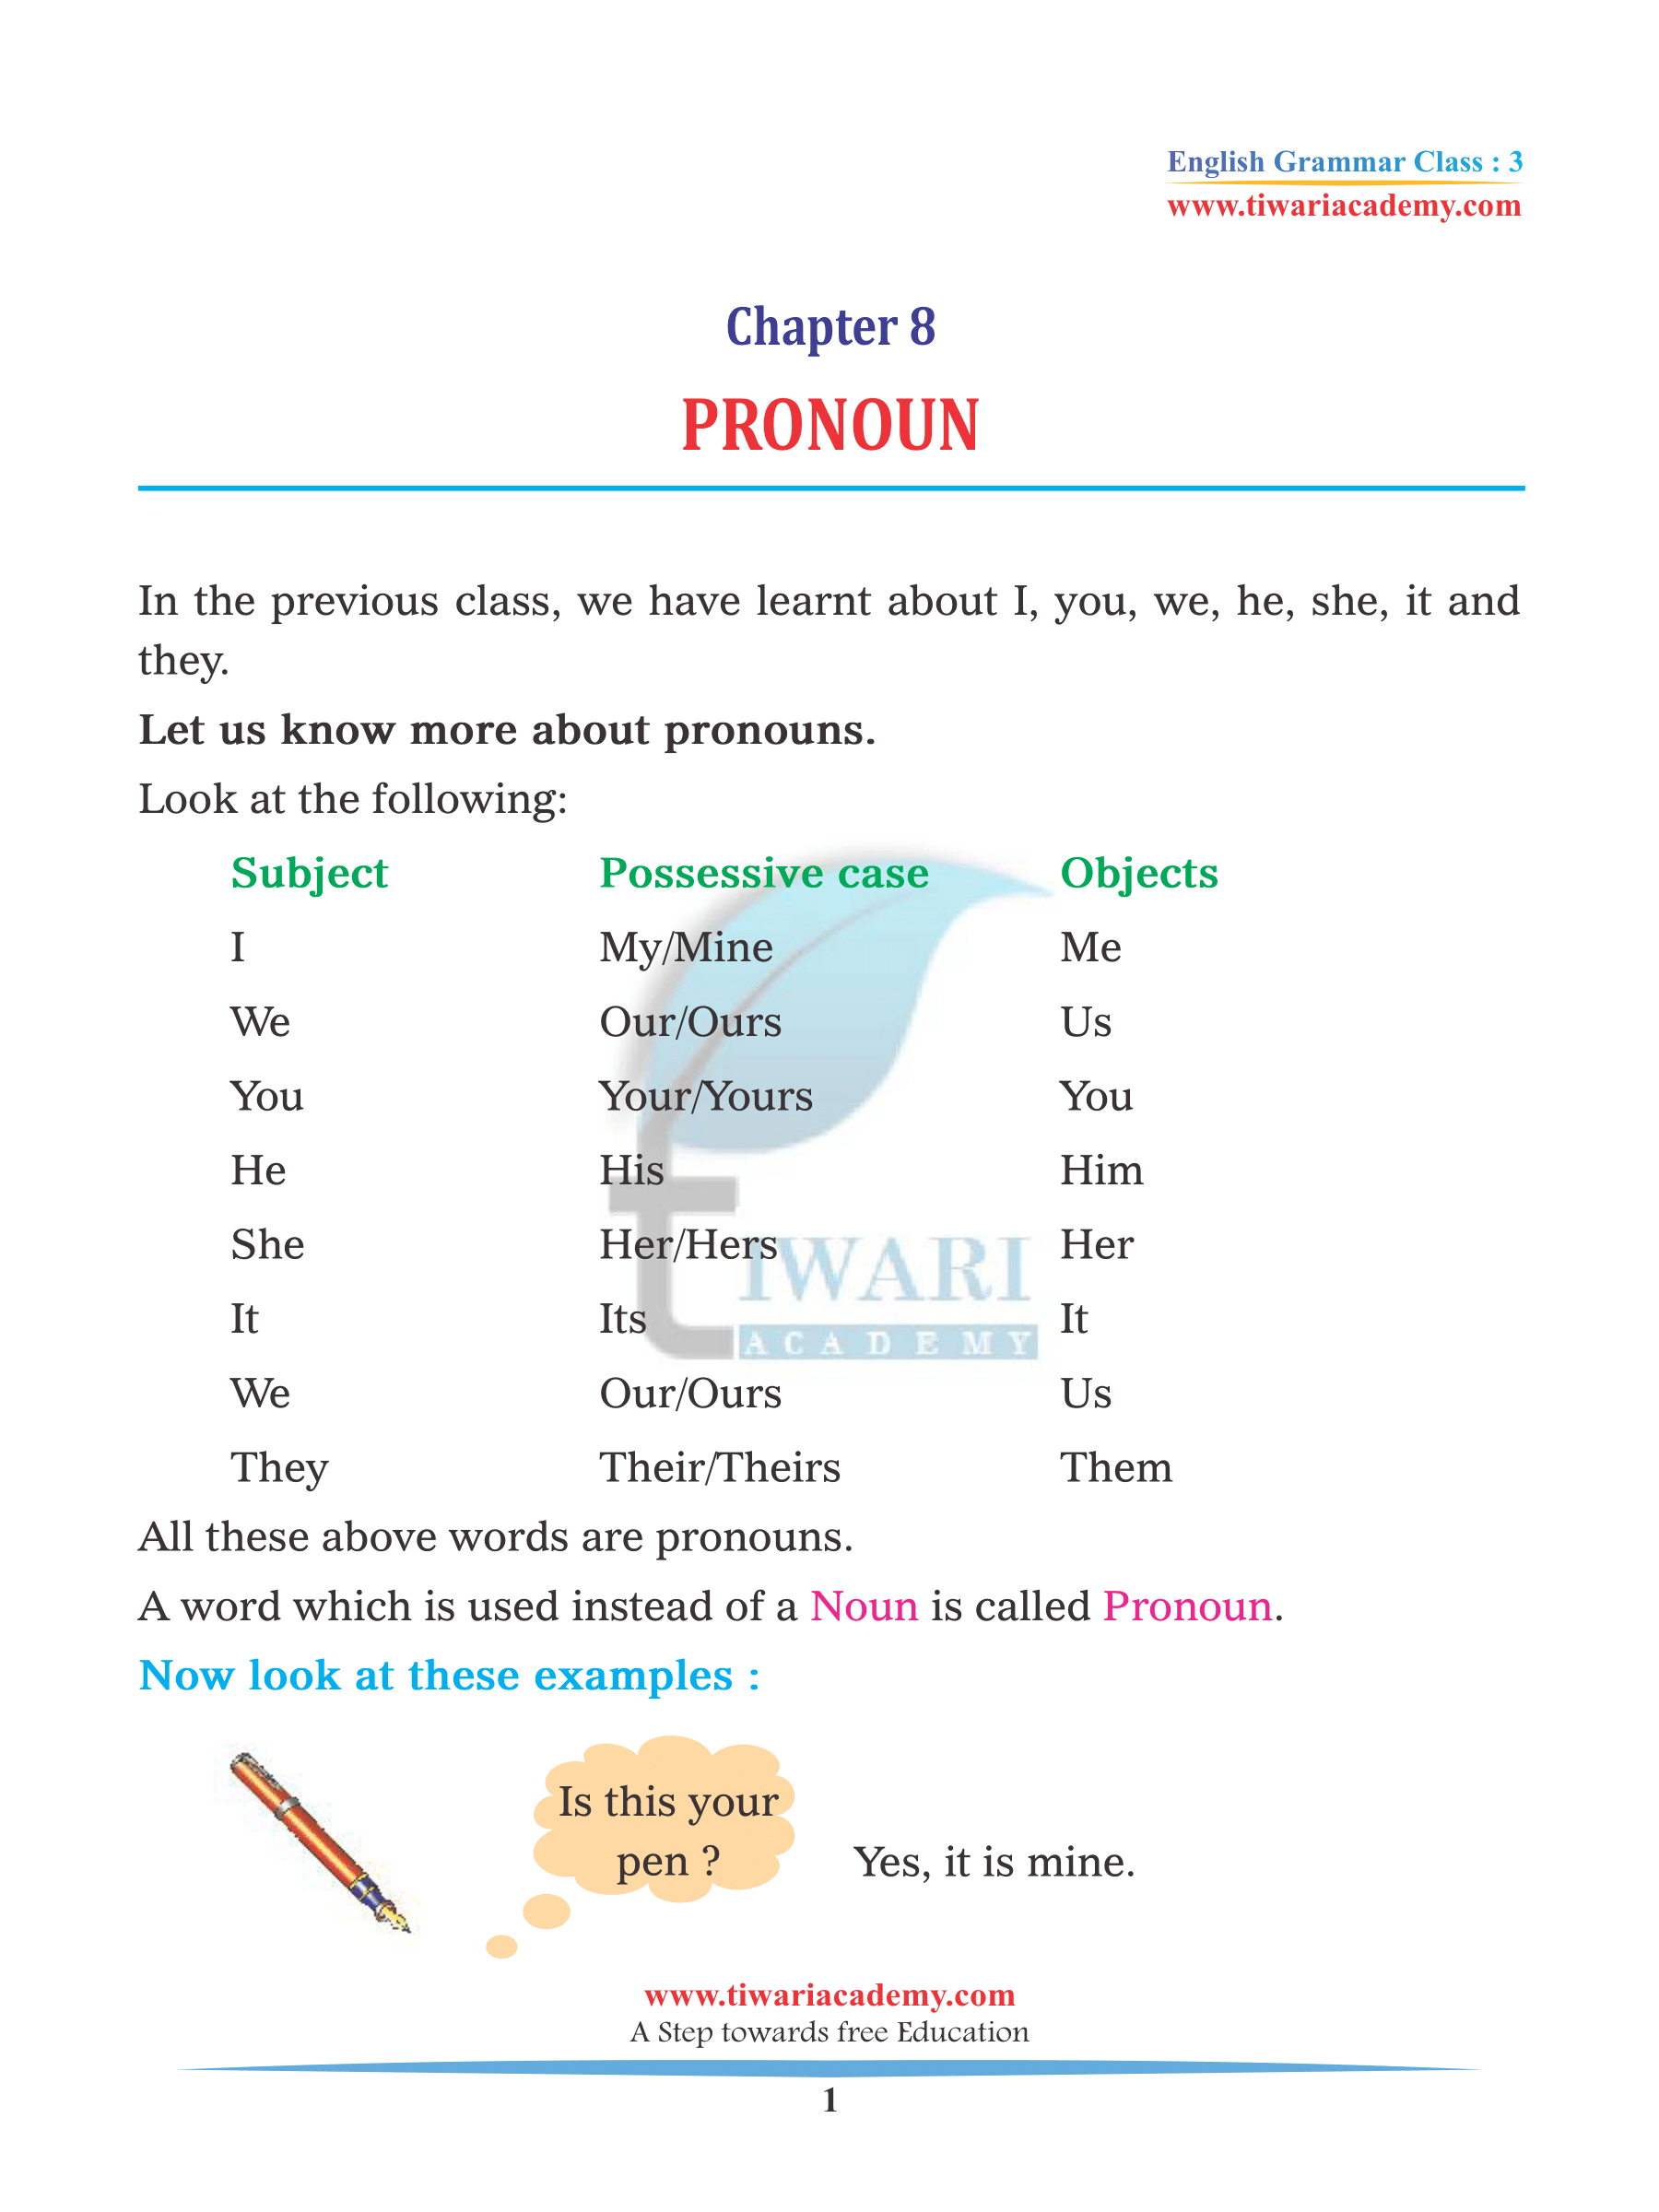 Class 3 English Grammar Chapter 8 Pronoun and its kind